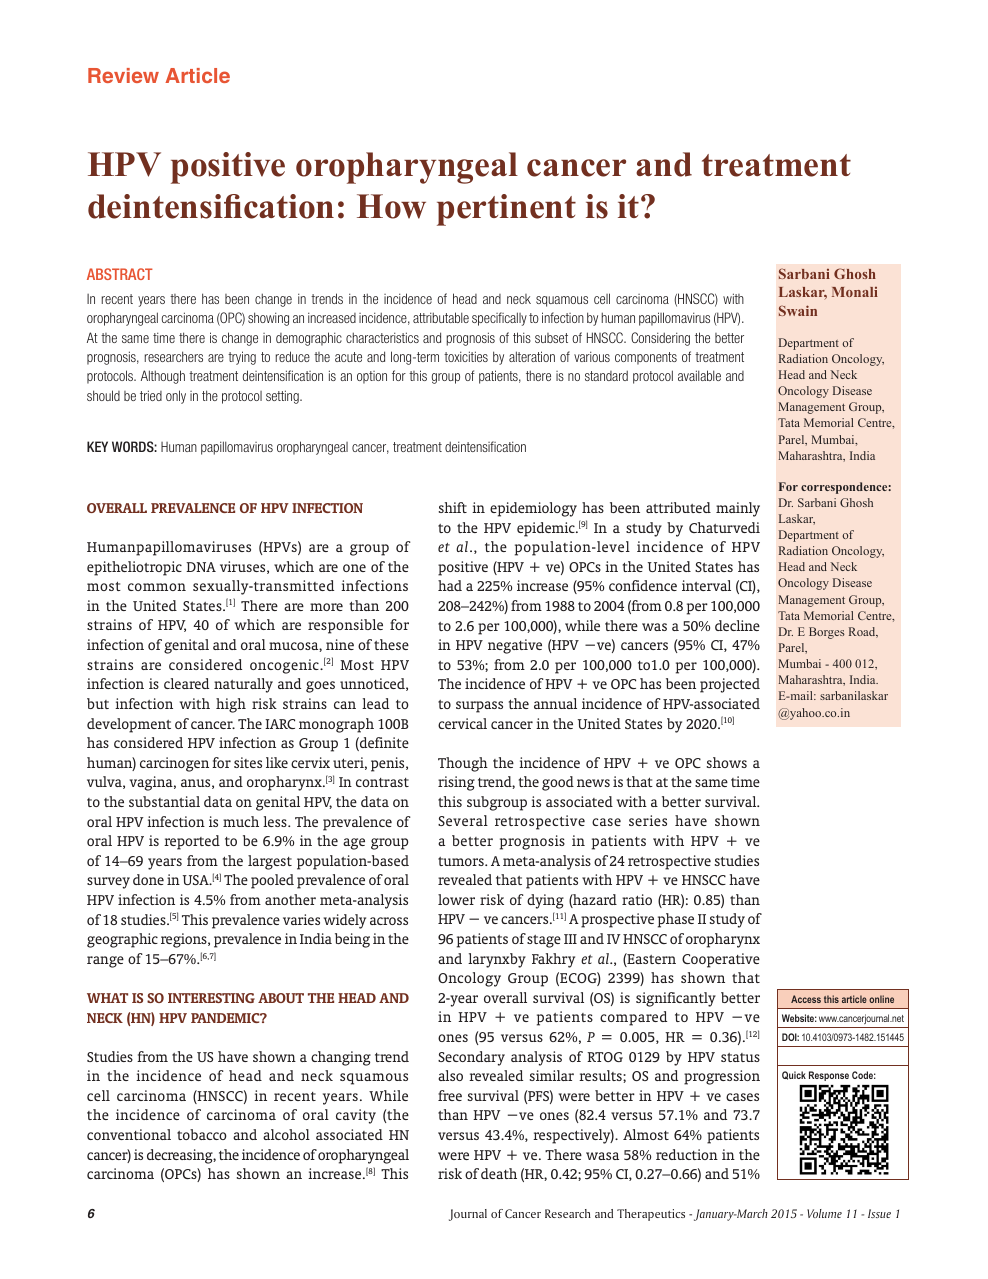 study of human papillomavirus and oropharyngeal cancer